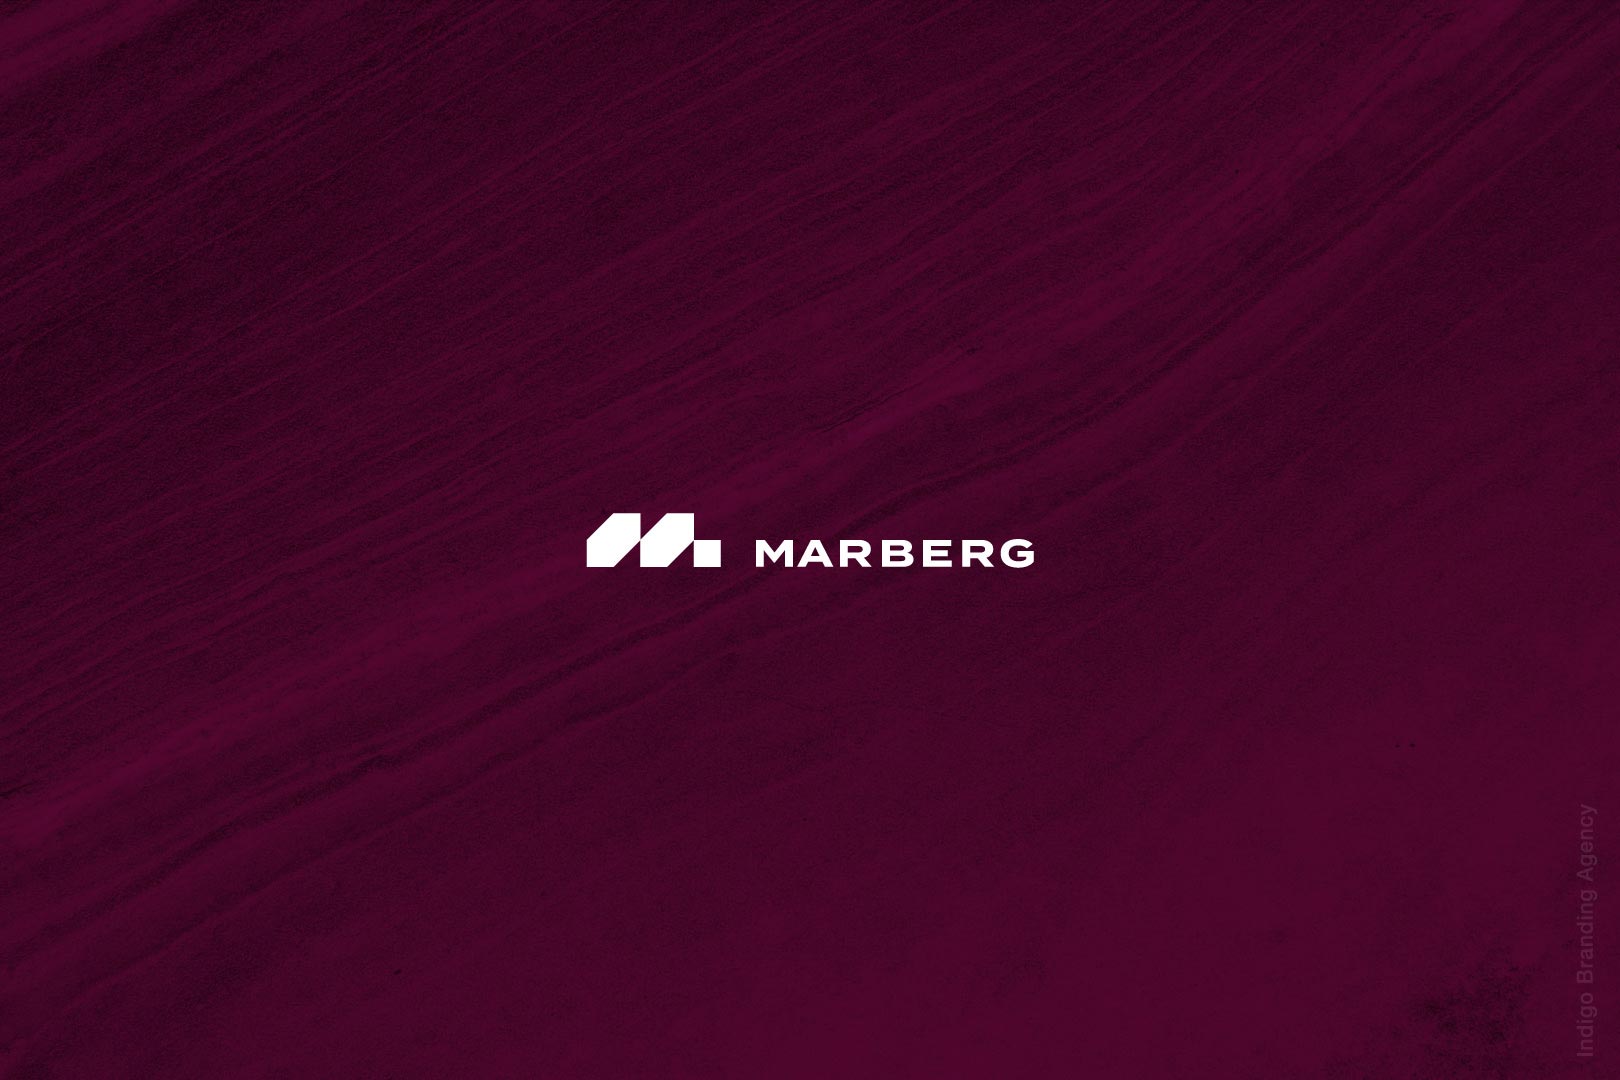 Marberg branding and logo design done for Vallex group by indigo branding in Yerevan